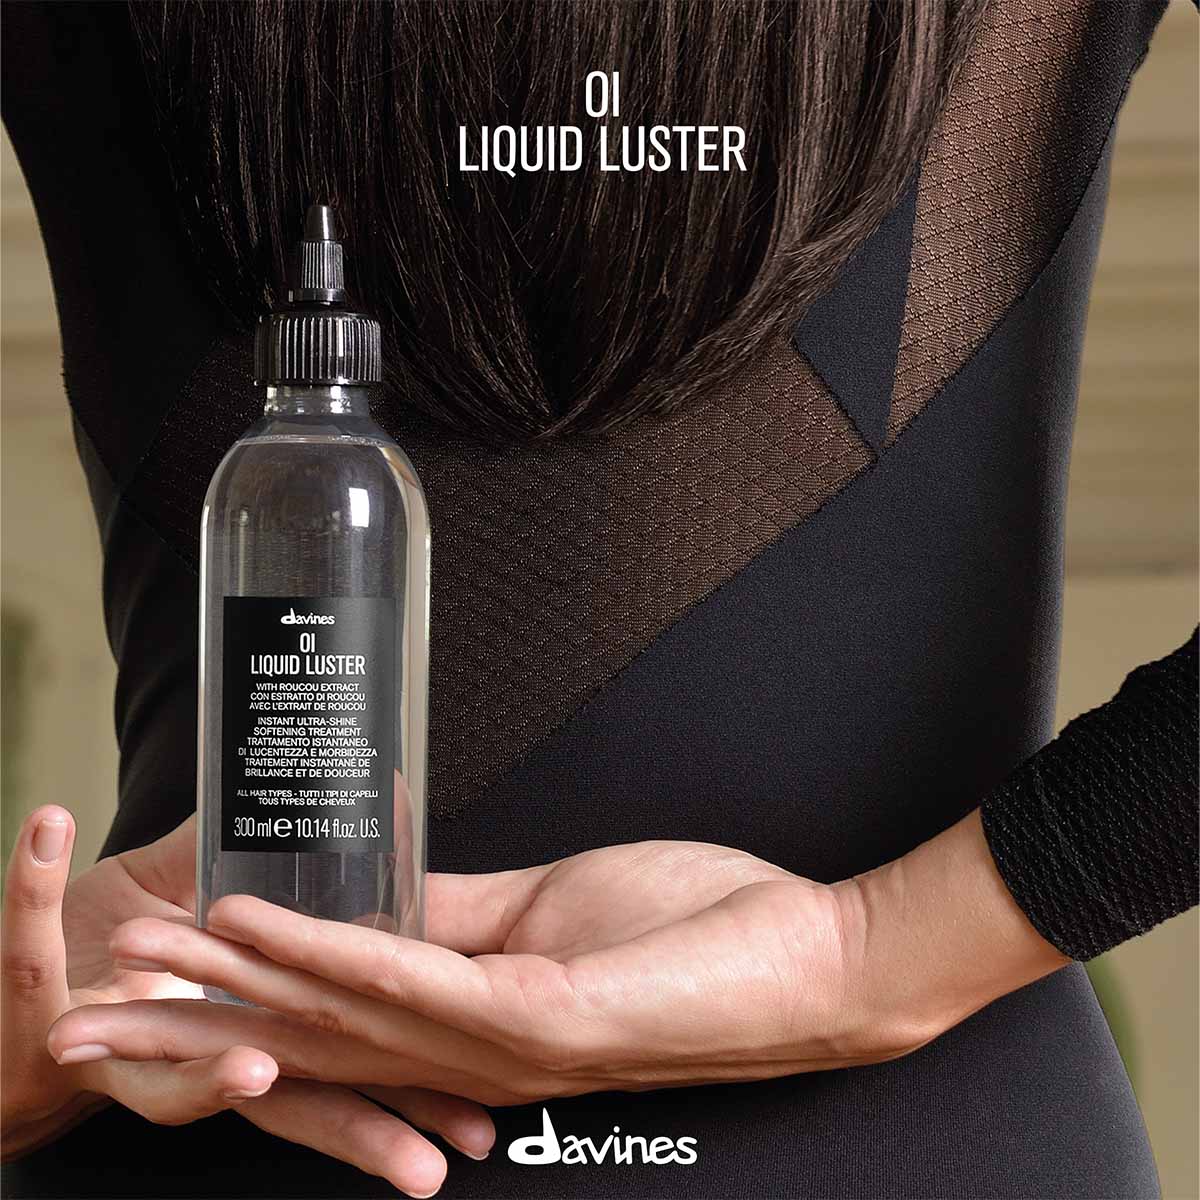 Davines OI Liquid Luster, Glansvatten, 300ml - Hairsale.se